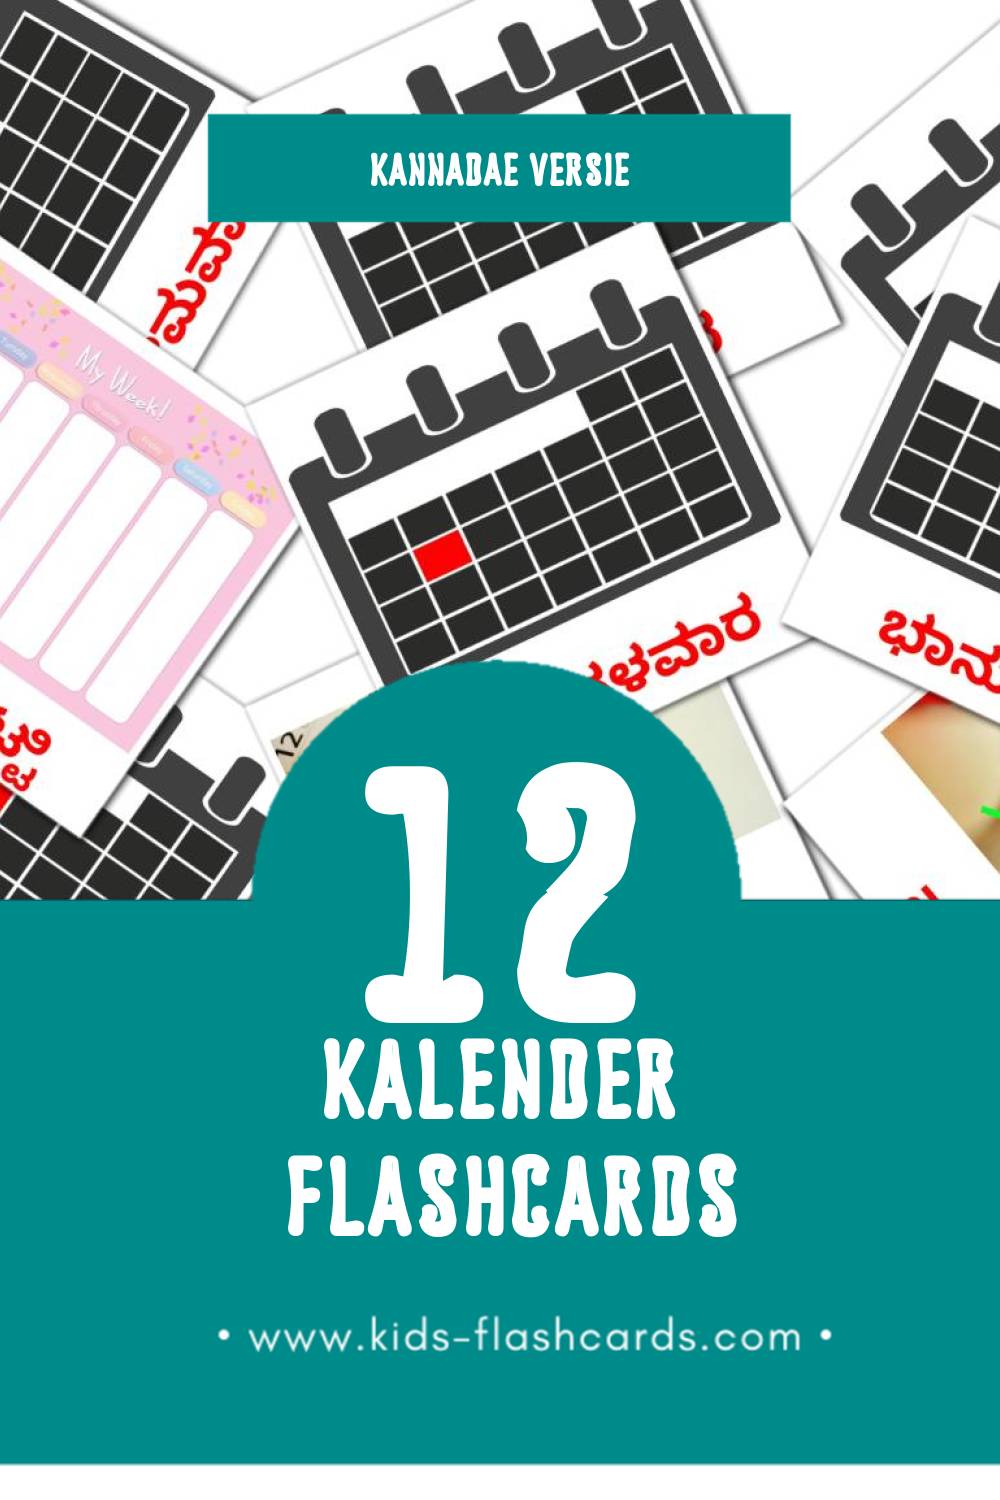 Visuele ಕ್ಯಾಲೆಂಡರ್ Flashcards voor Kleuters (12 kaarten in het Kannada)